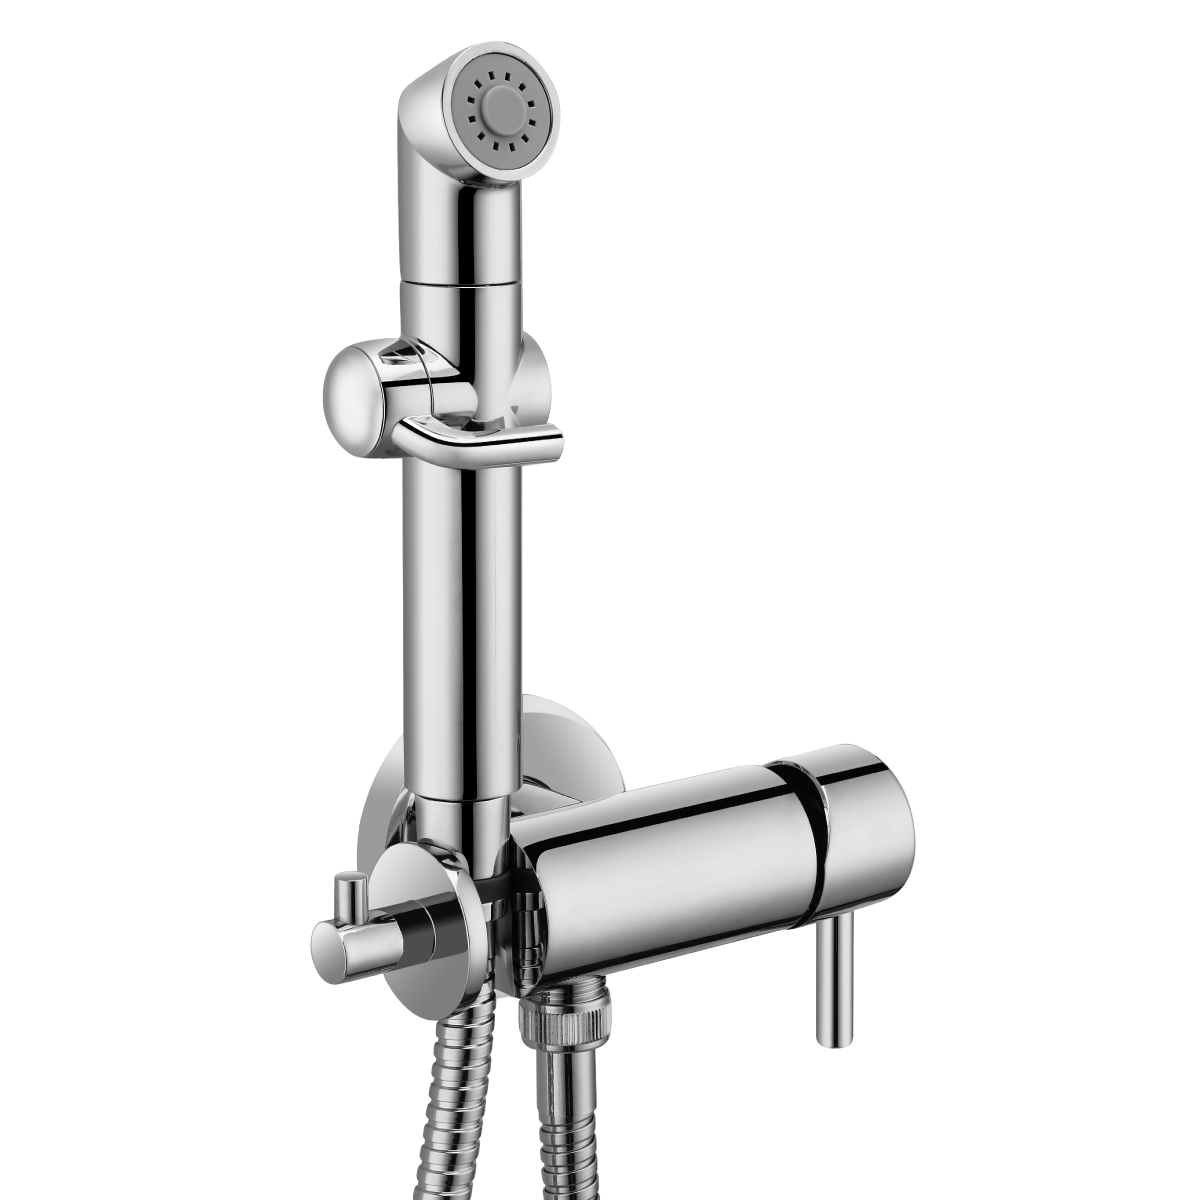 LM7166C Built-in bidet faucet